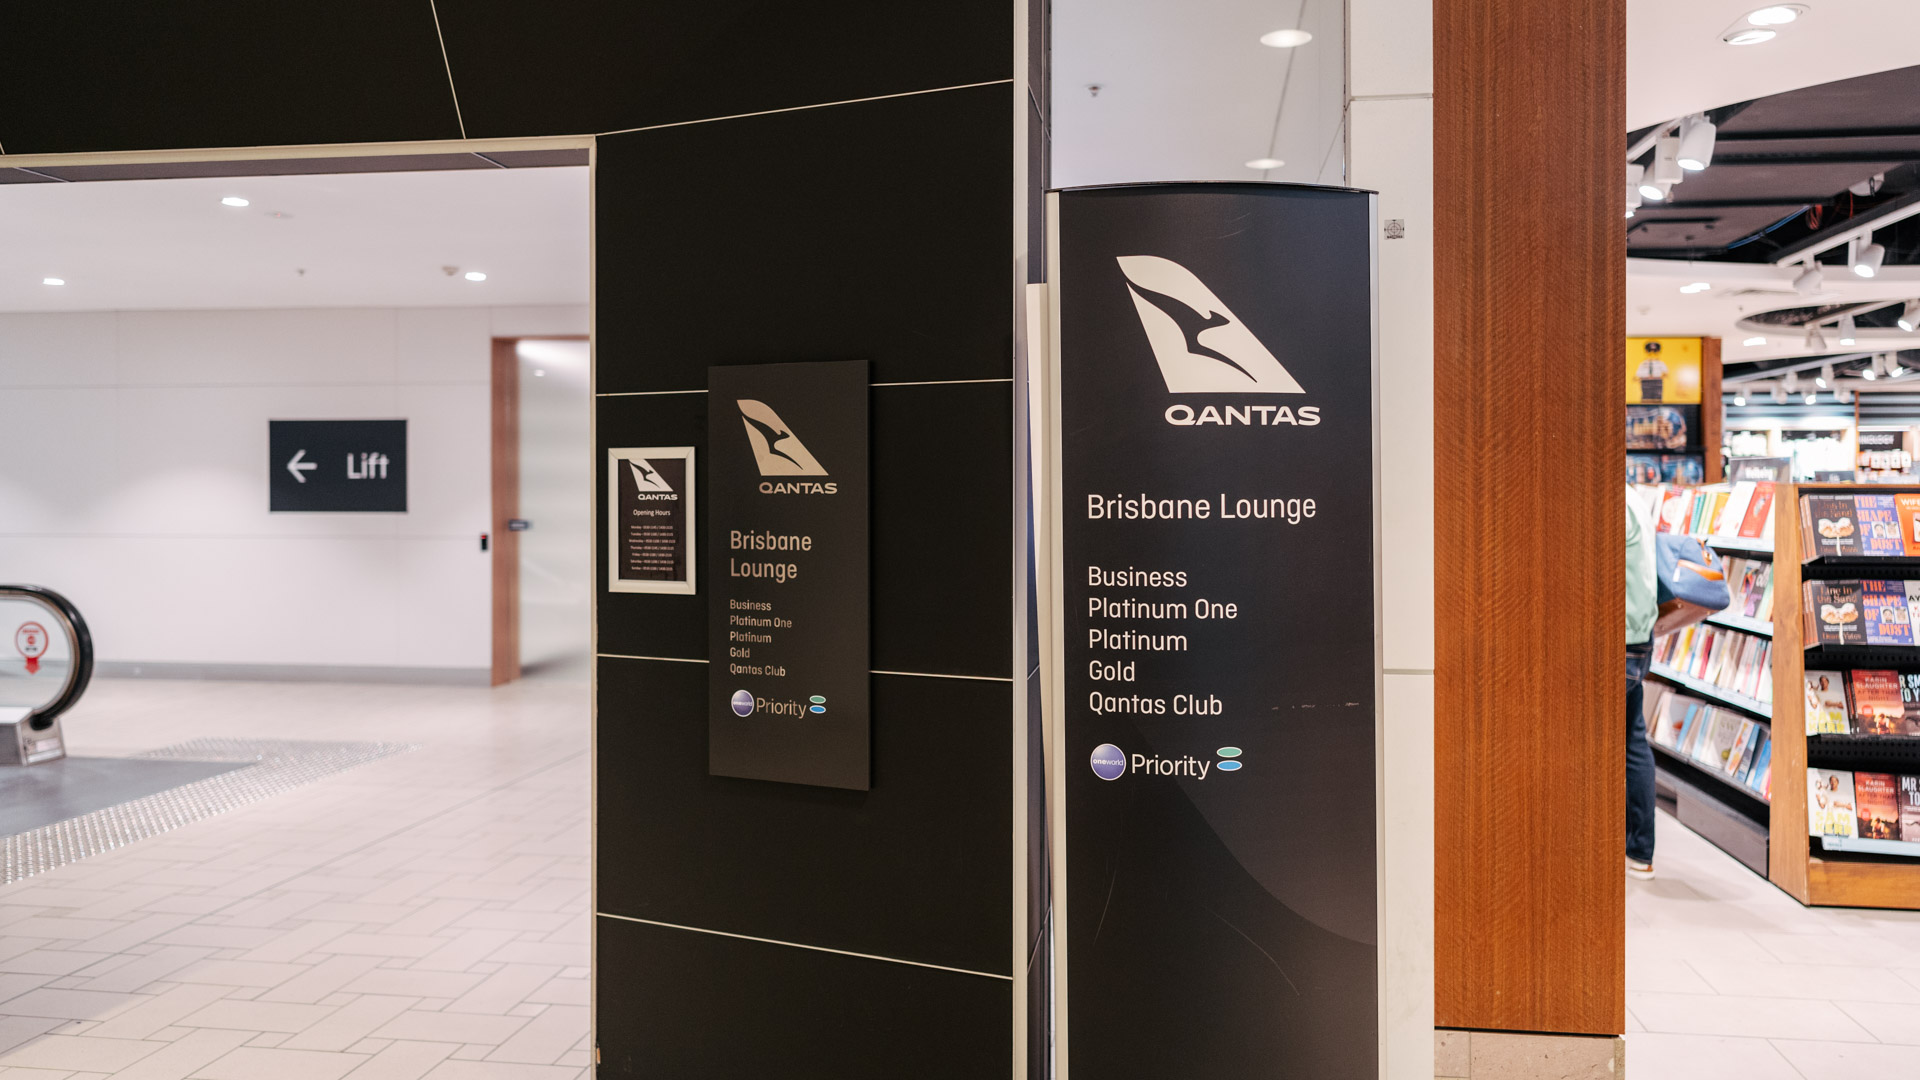 Qantas International Brisbane Lounge entrance